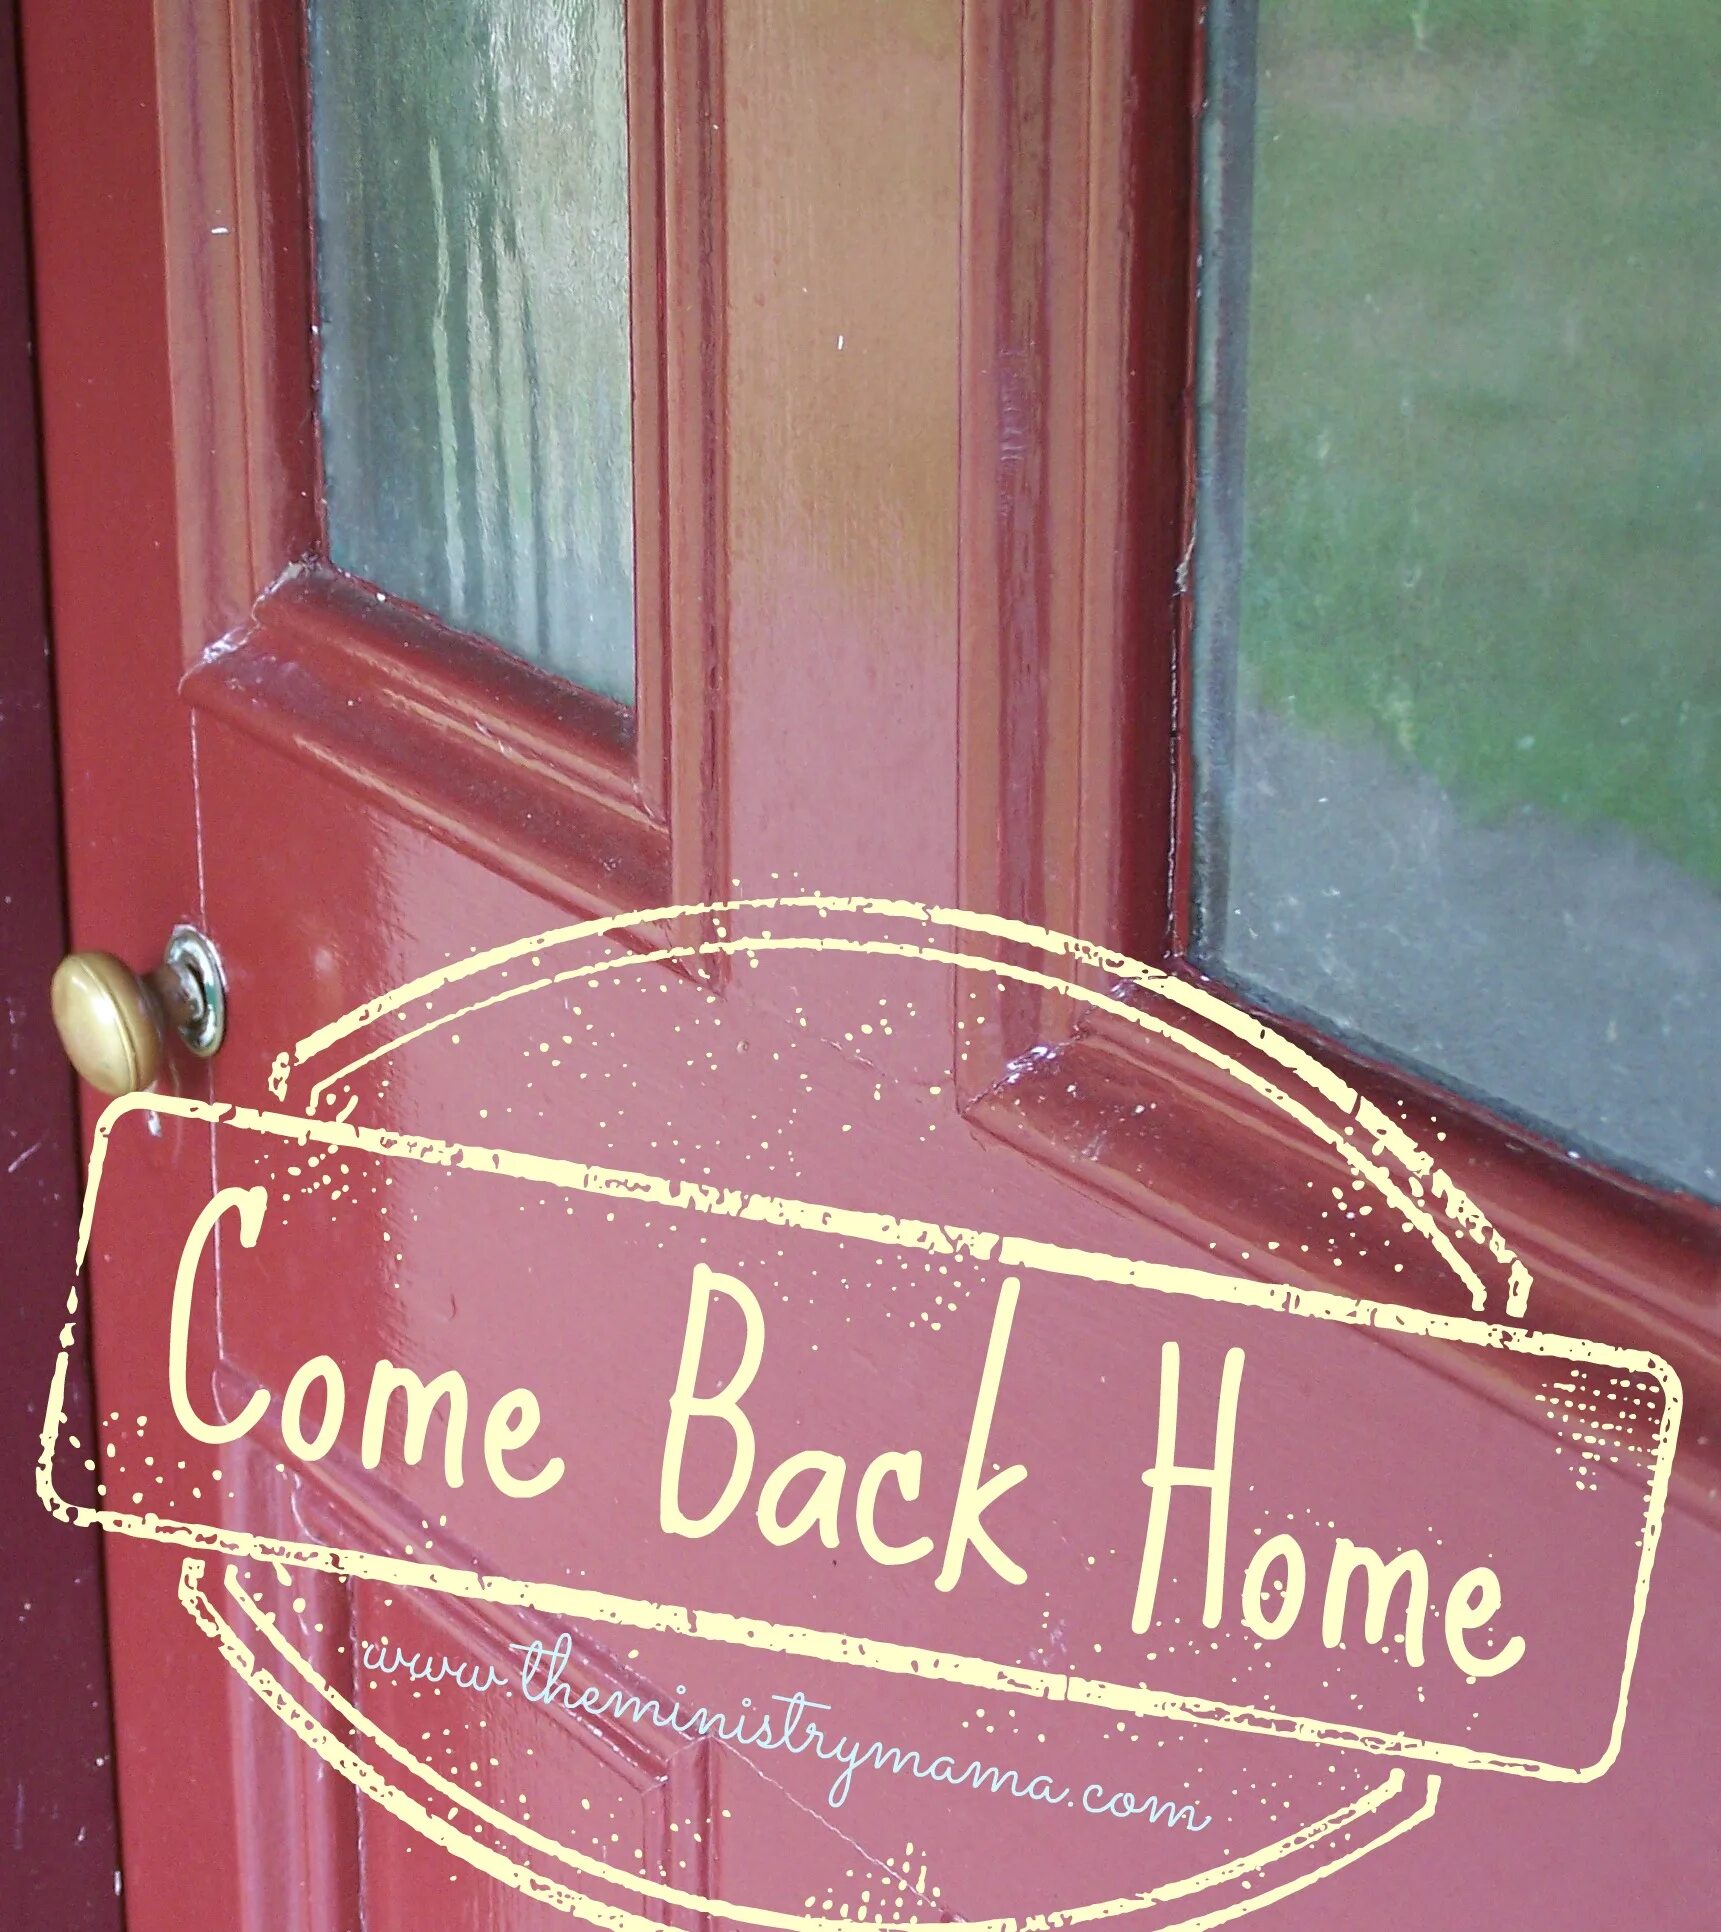 He comes back home. Come back картинка для детей. Back Home. Coming back Home. Come Home.